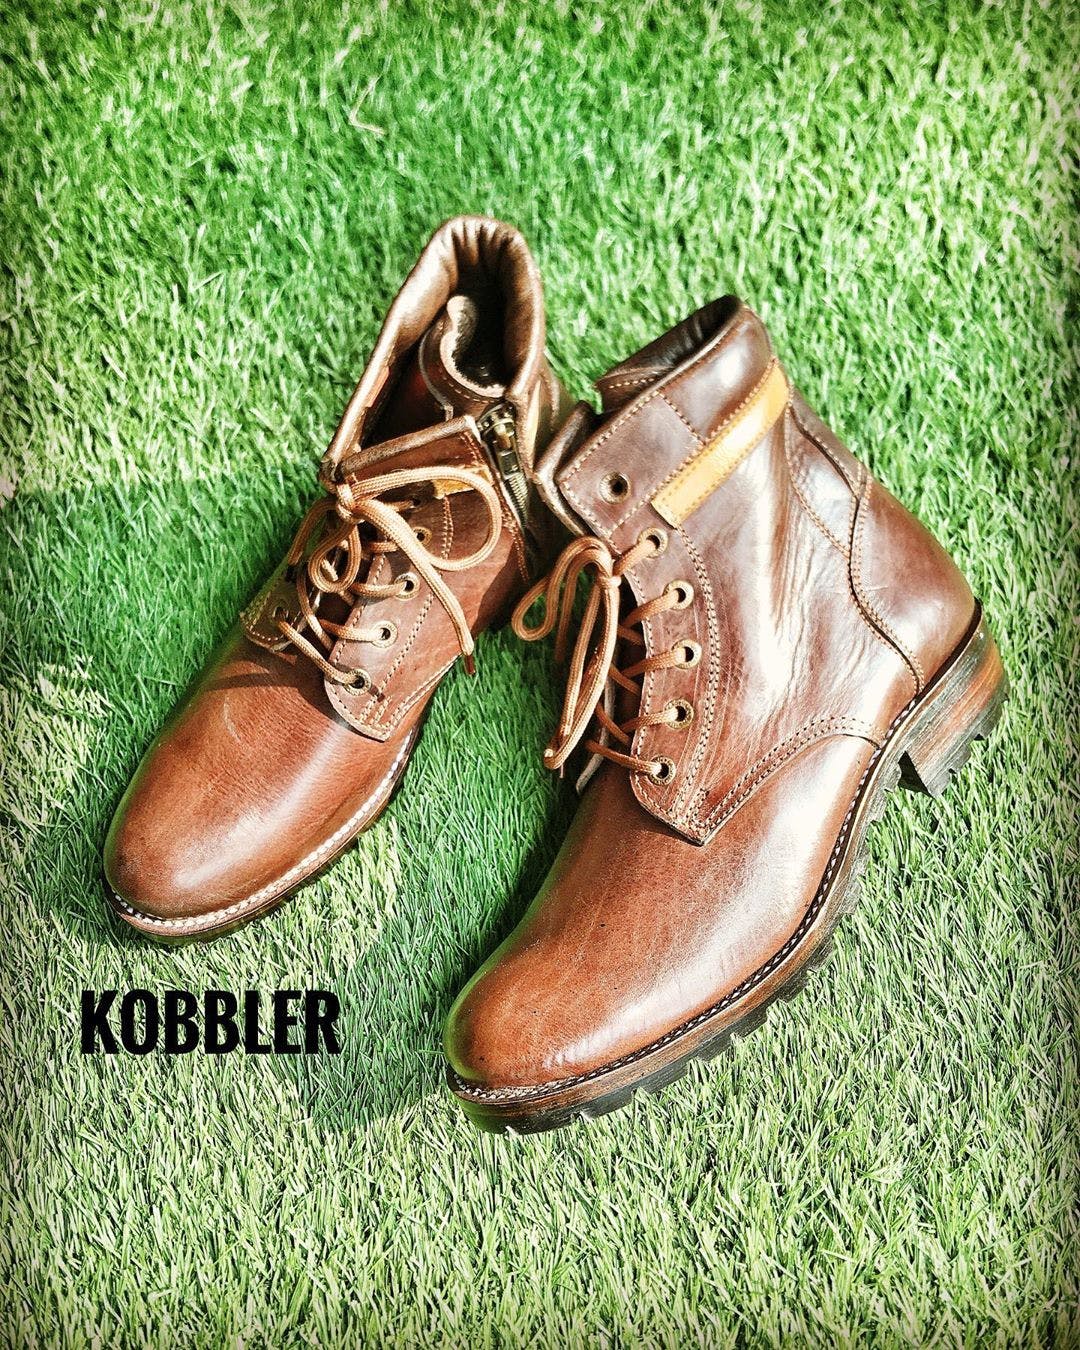 kobbler shoes